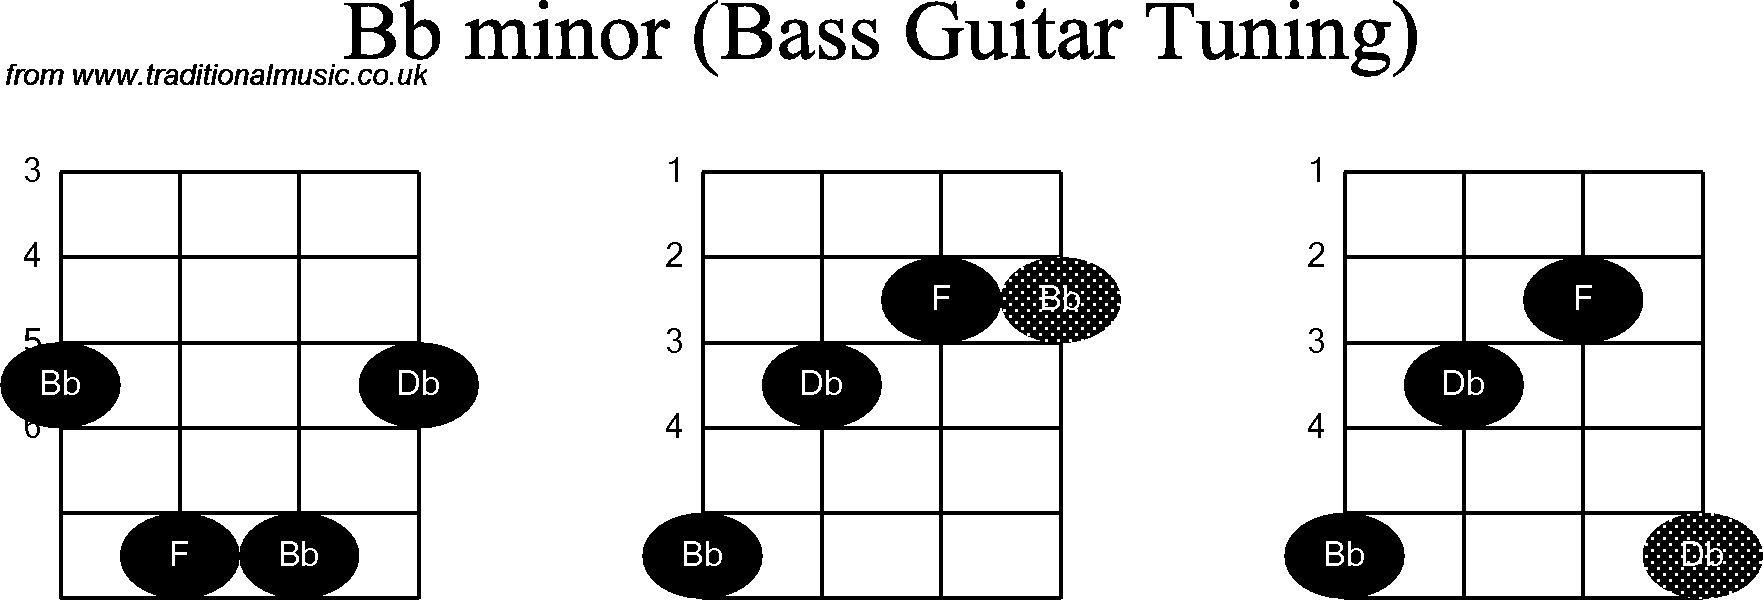 Bass Guitar chord charts for: Bb Minor